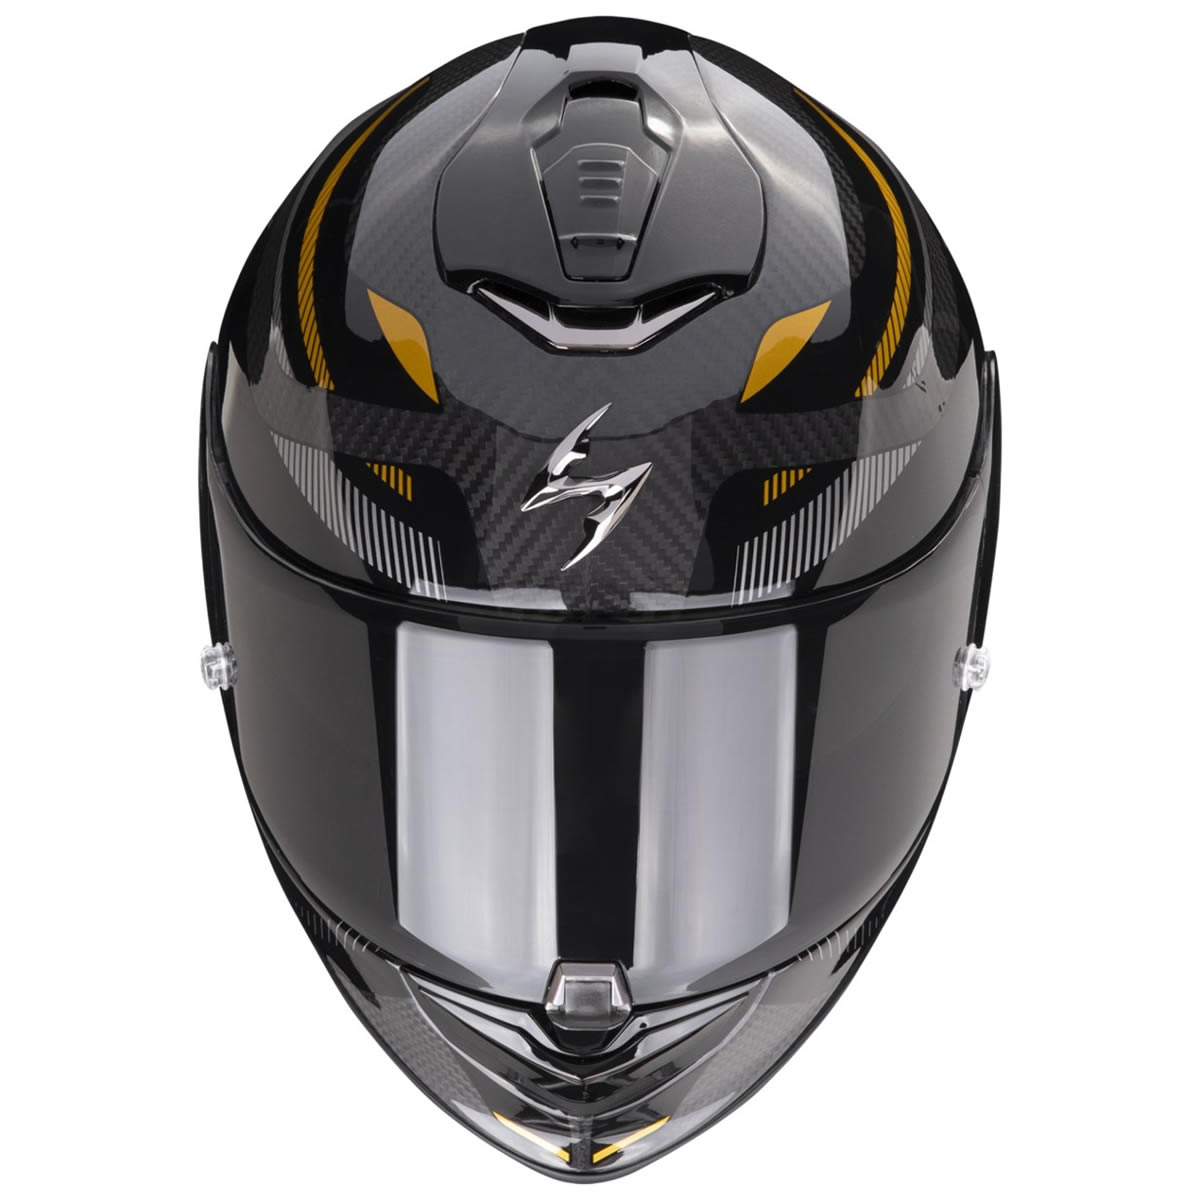 Scorpion Helm EXO-1400 EVO Carbon Air Kydra, schwarz-gold